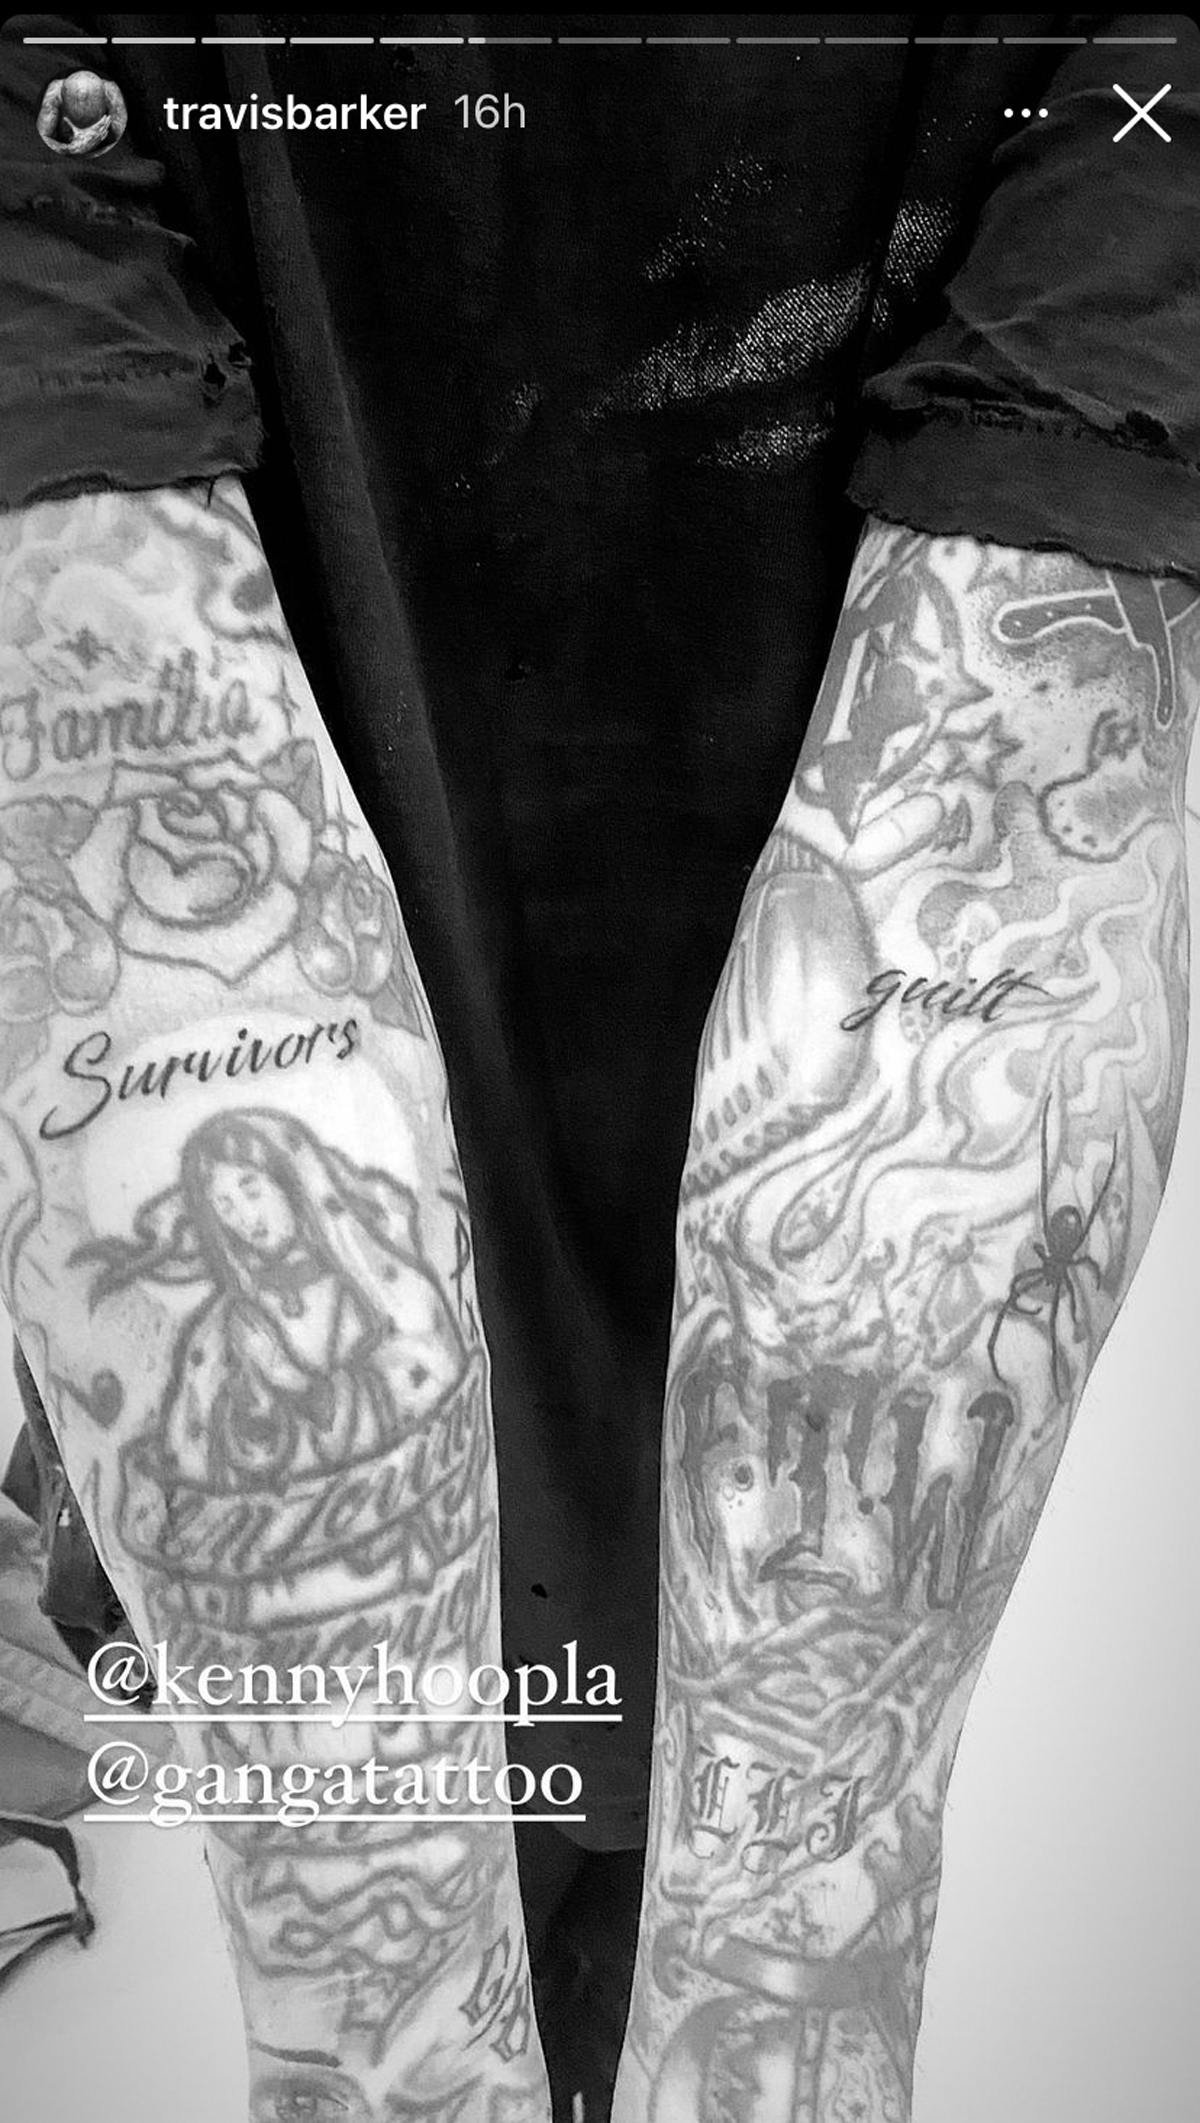 Travis Barker Gets Deeply Personal & Sad Tattoo Referencing His 2008 Plane Crash 